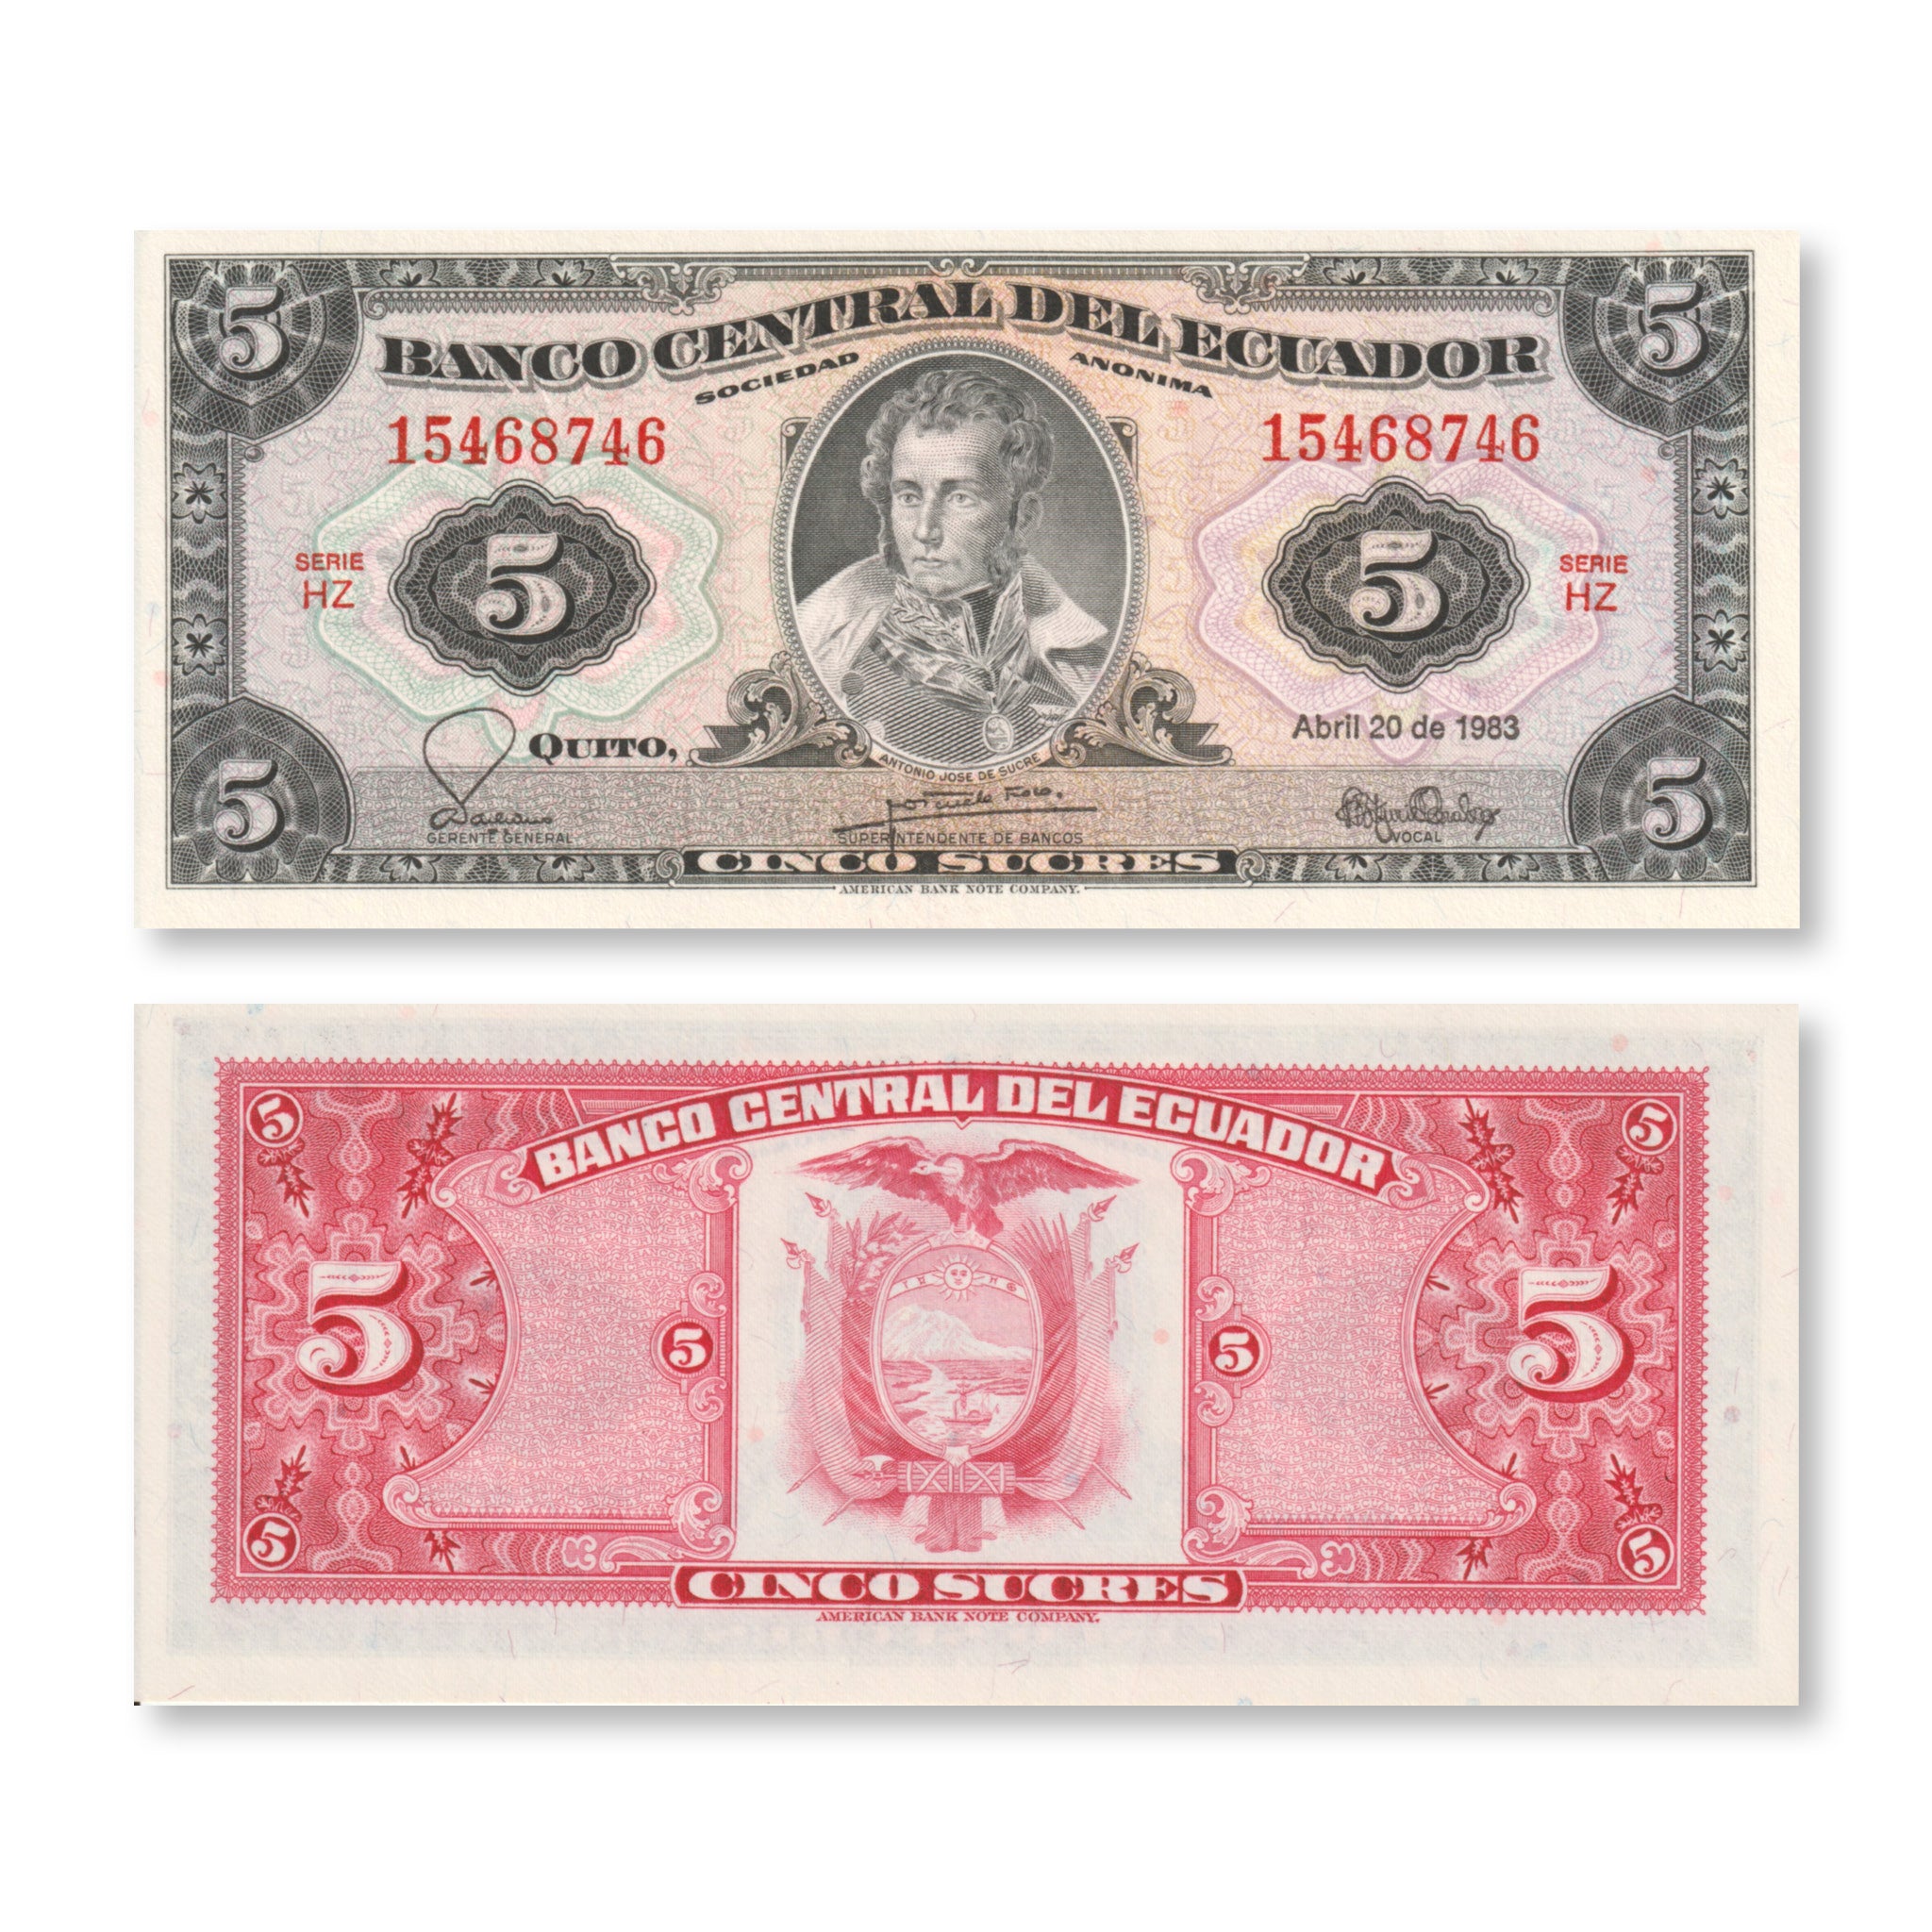 Ecuador 5 Sucres, 1983, P108b, UNC - Robert's World Money - World Banknotes